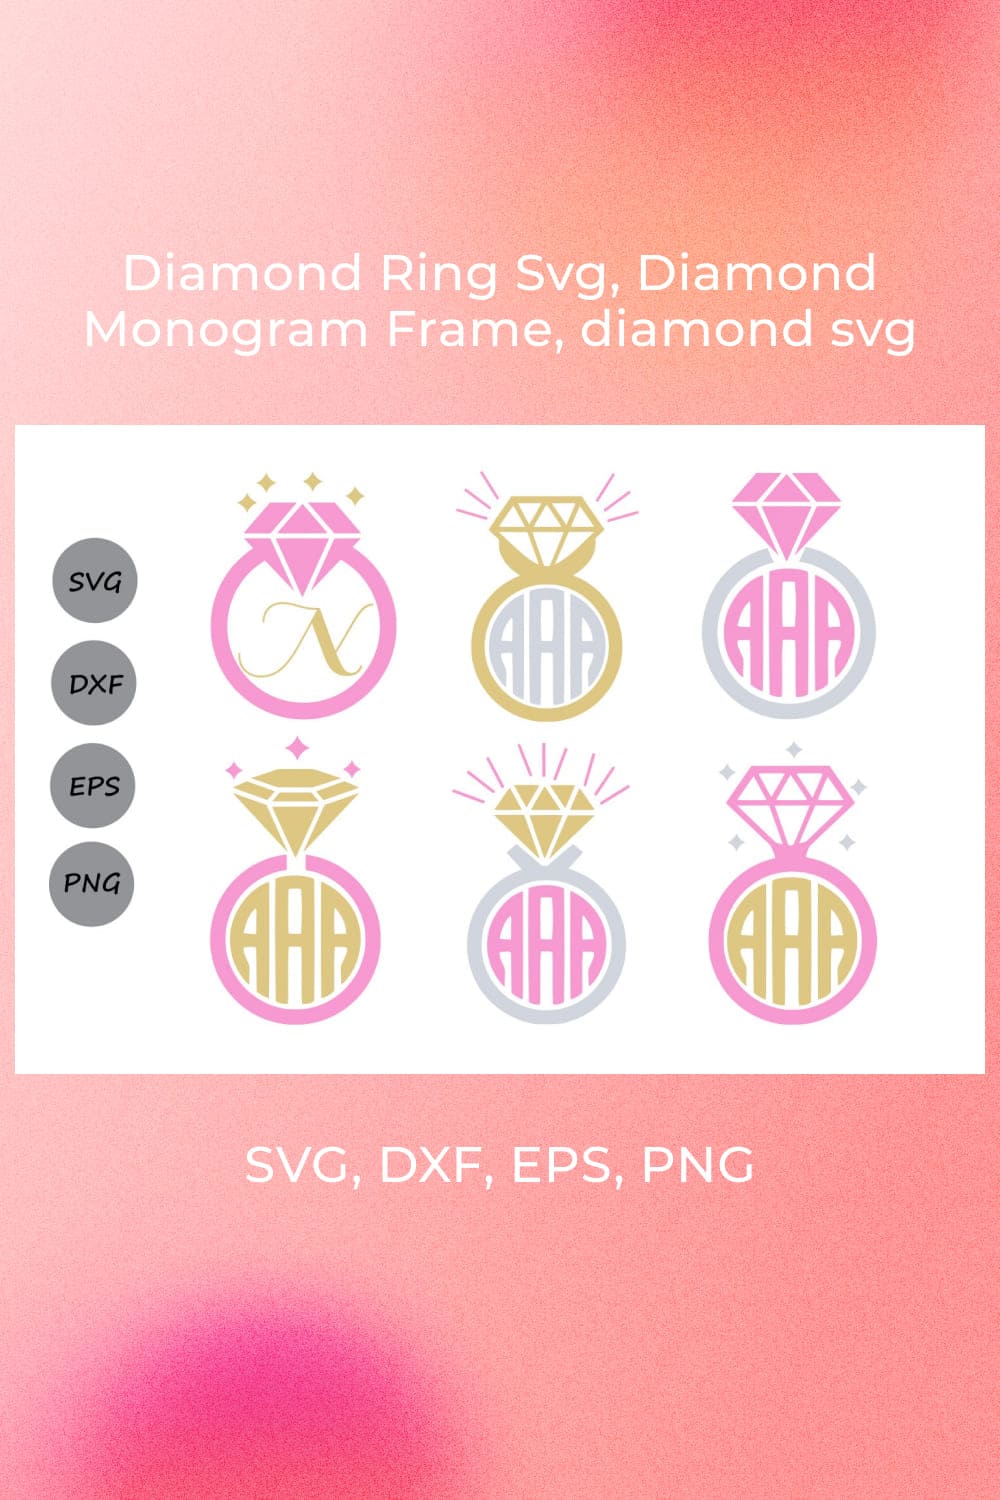 diamond ring svg diamond monogram frame diamond svg. pinterest